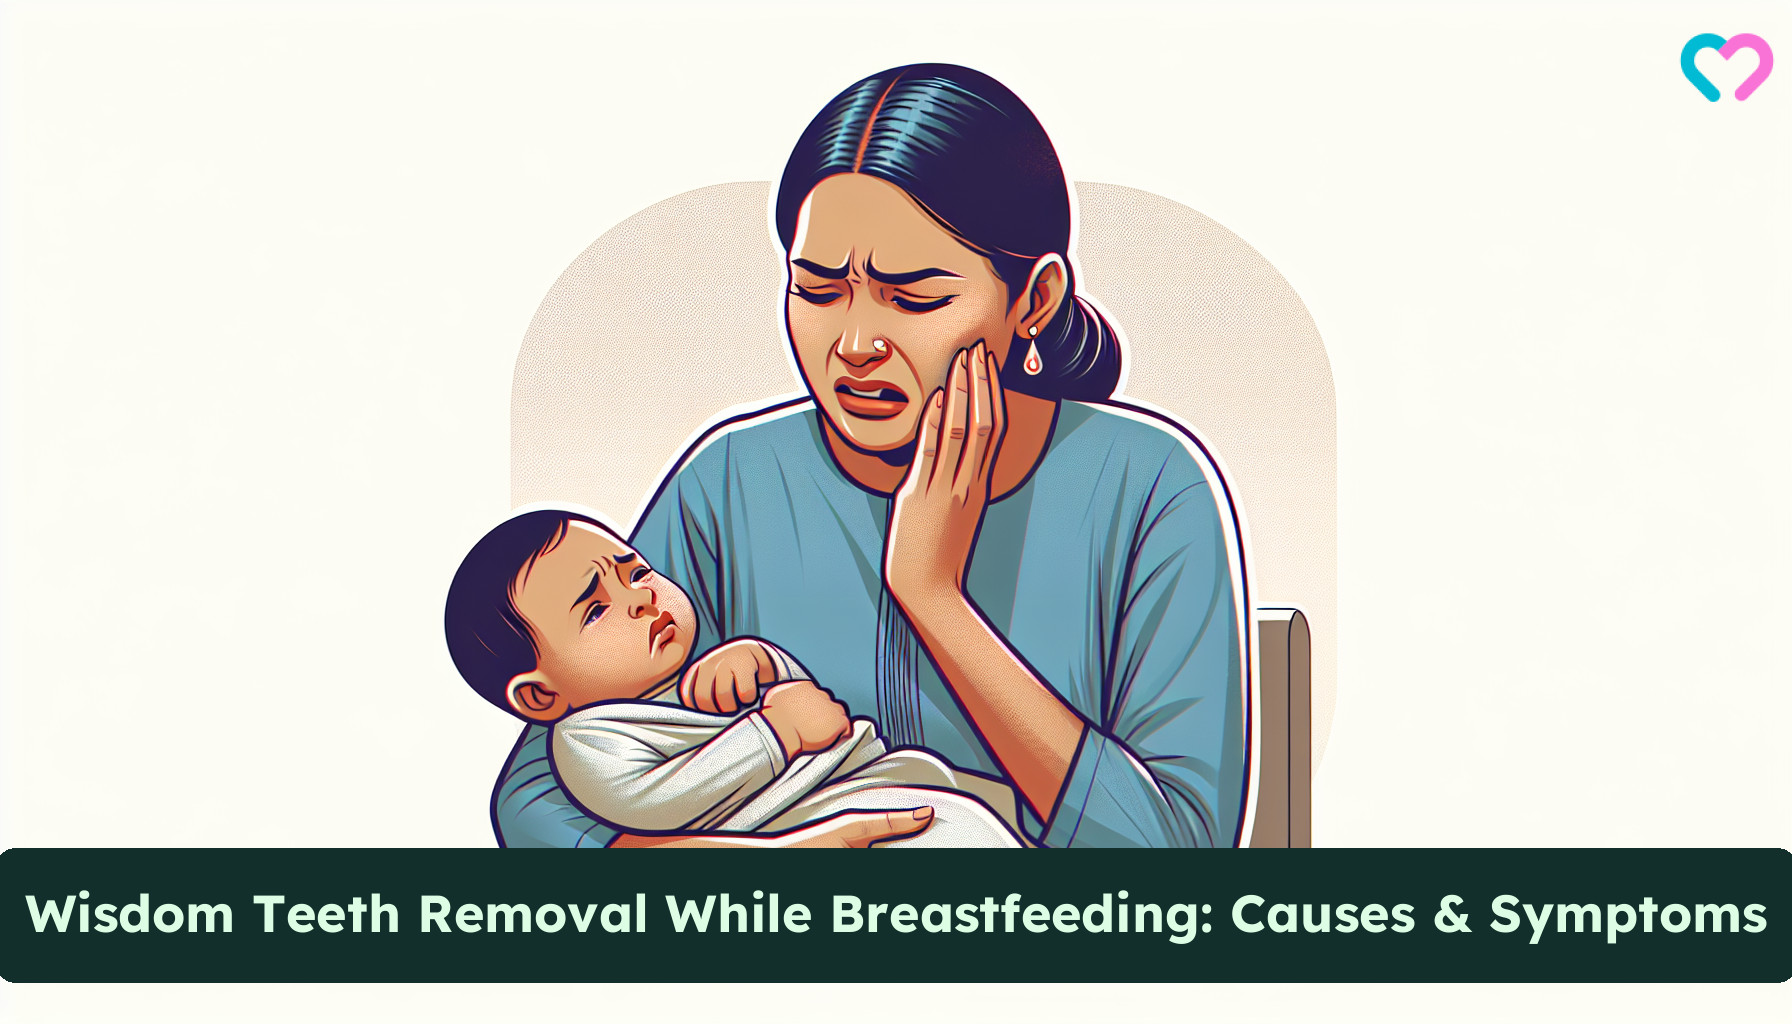 Wisdom Teeth Removal During Breastfeeding_illustration